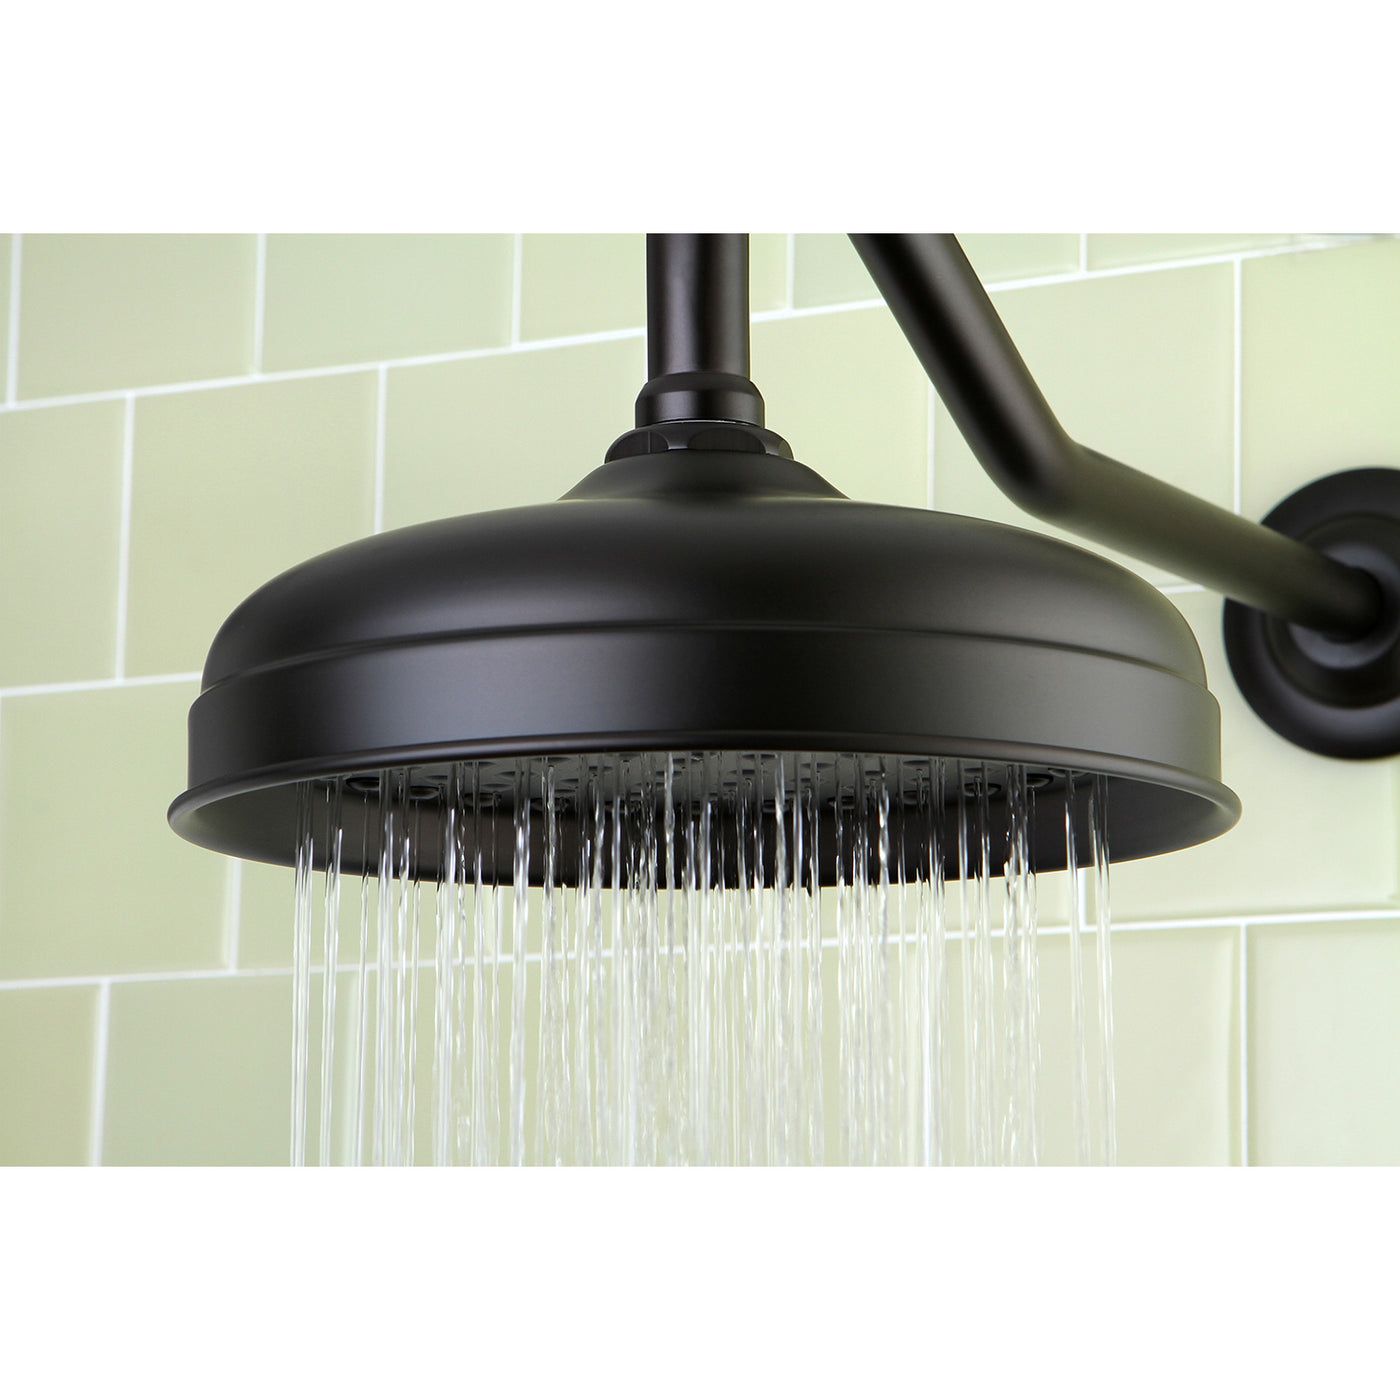 Elements of Design DK1245 8-Inch Raindrop Shower Head, Oil Rubbed Bronze